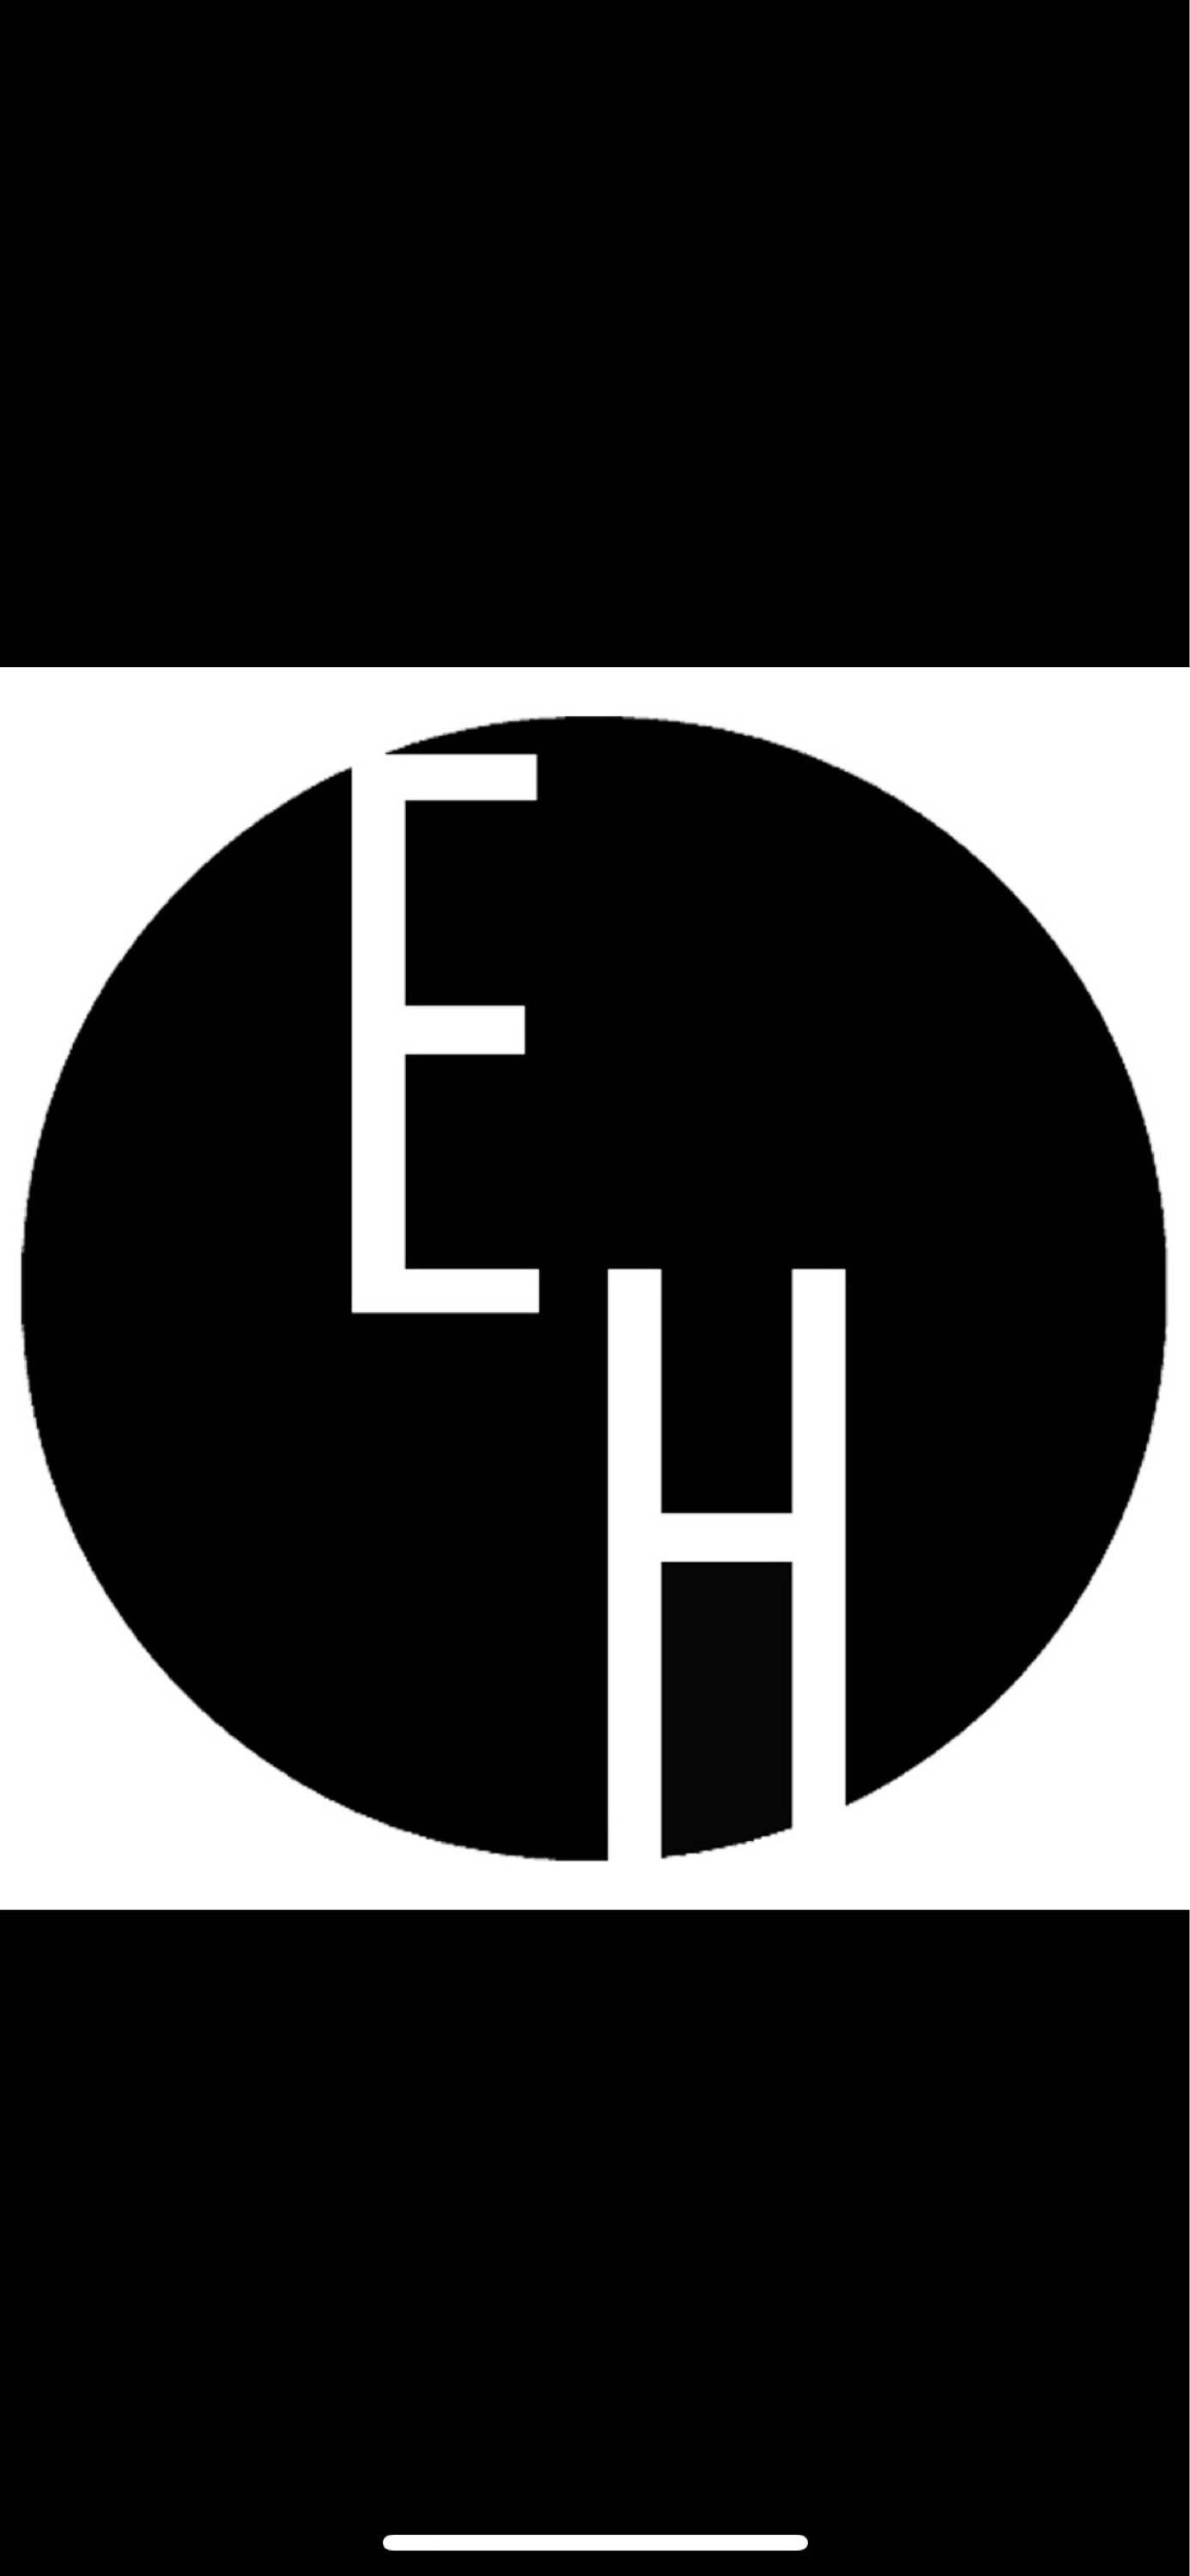 Event Horizon Projects Logo